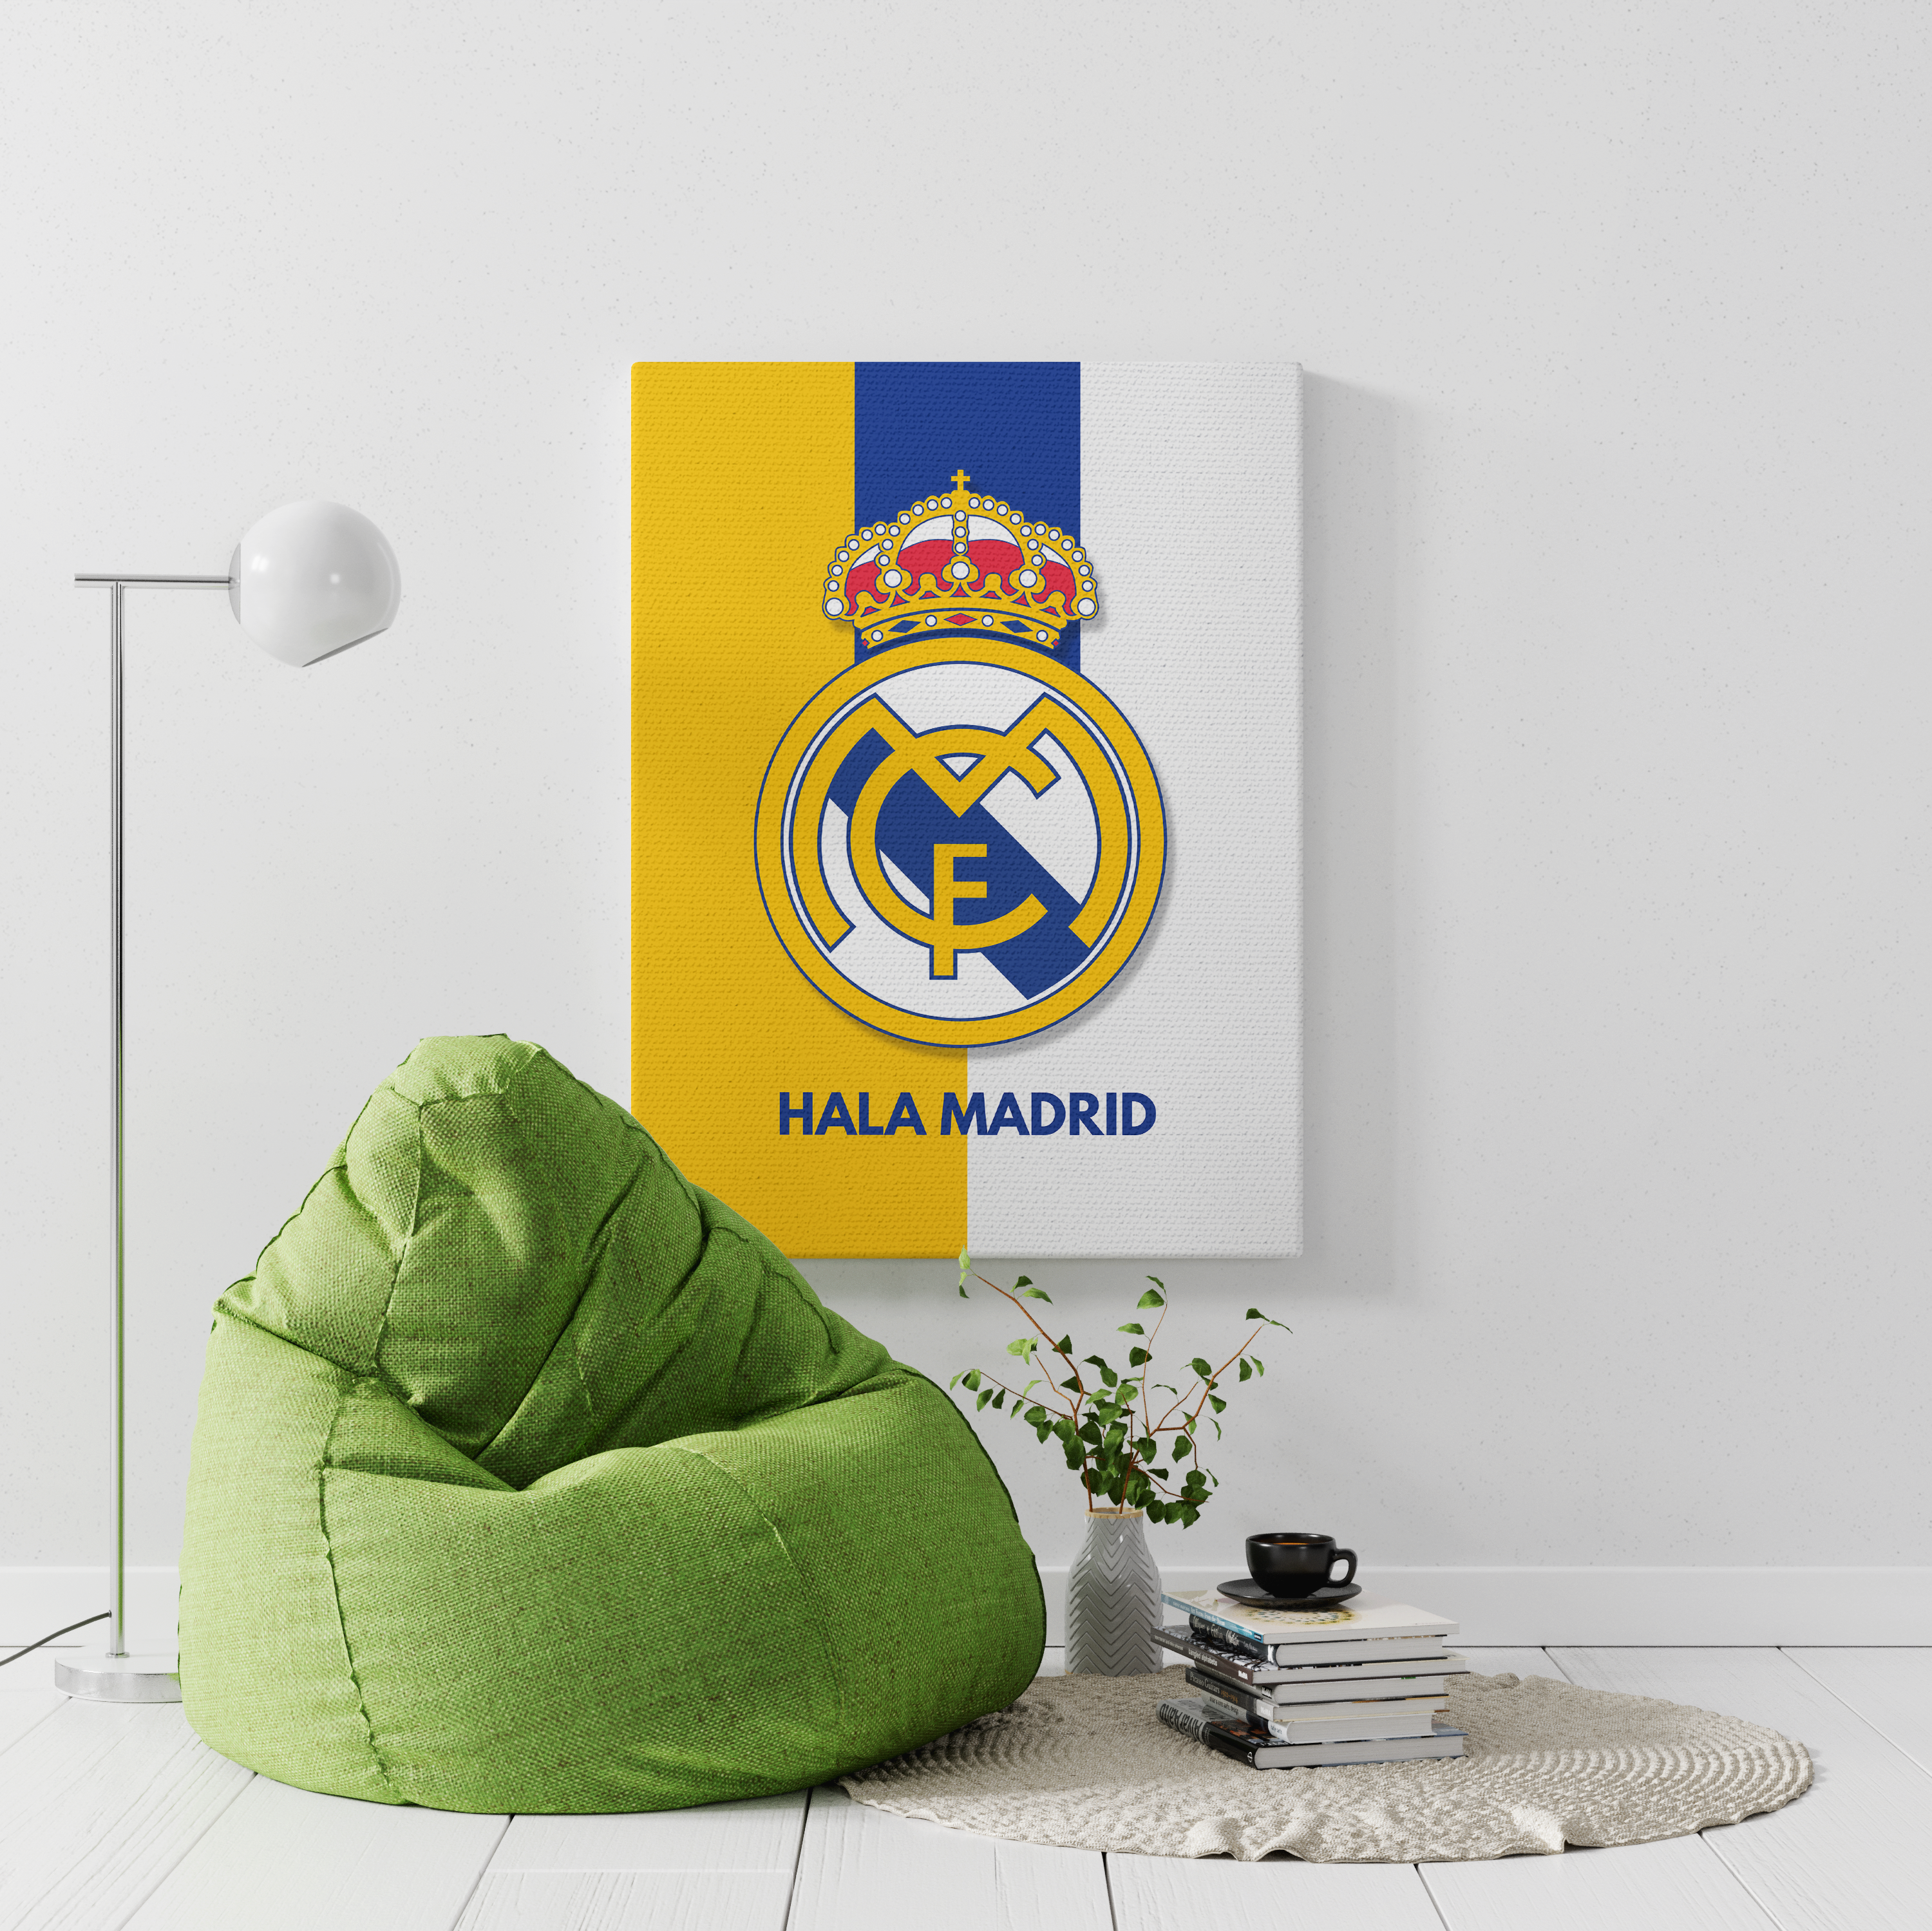 hala Madrid 🤍. My poster design on Madrid's conquest : r/realmadrid